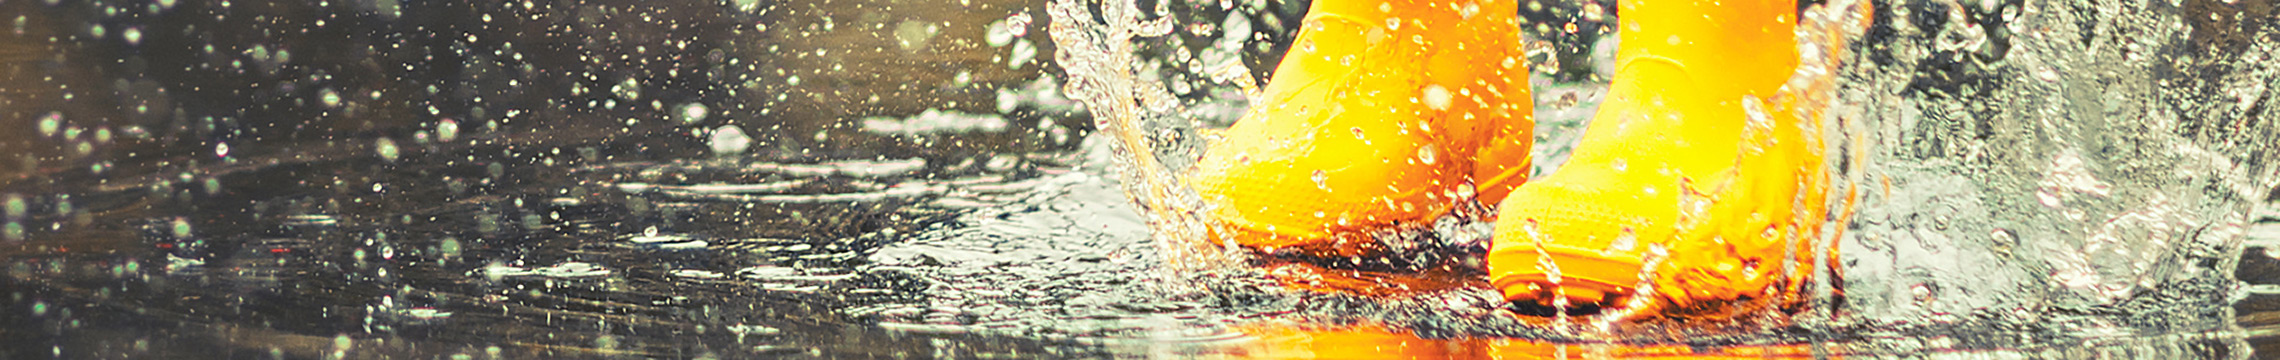 Child in yellow rainboots splashing in rain puddles